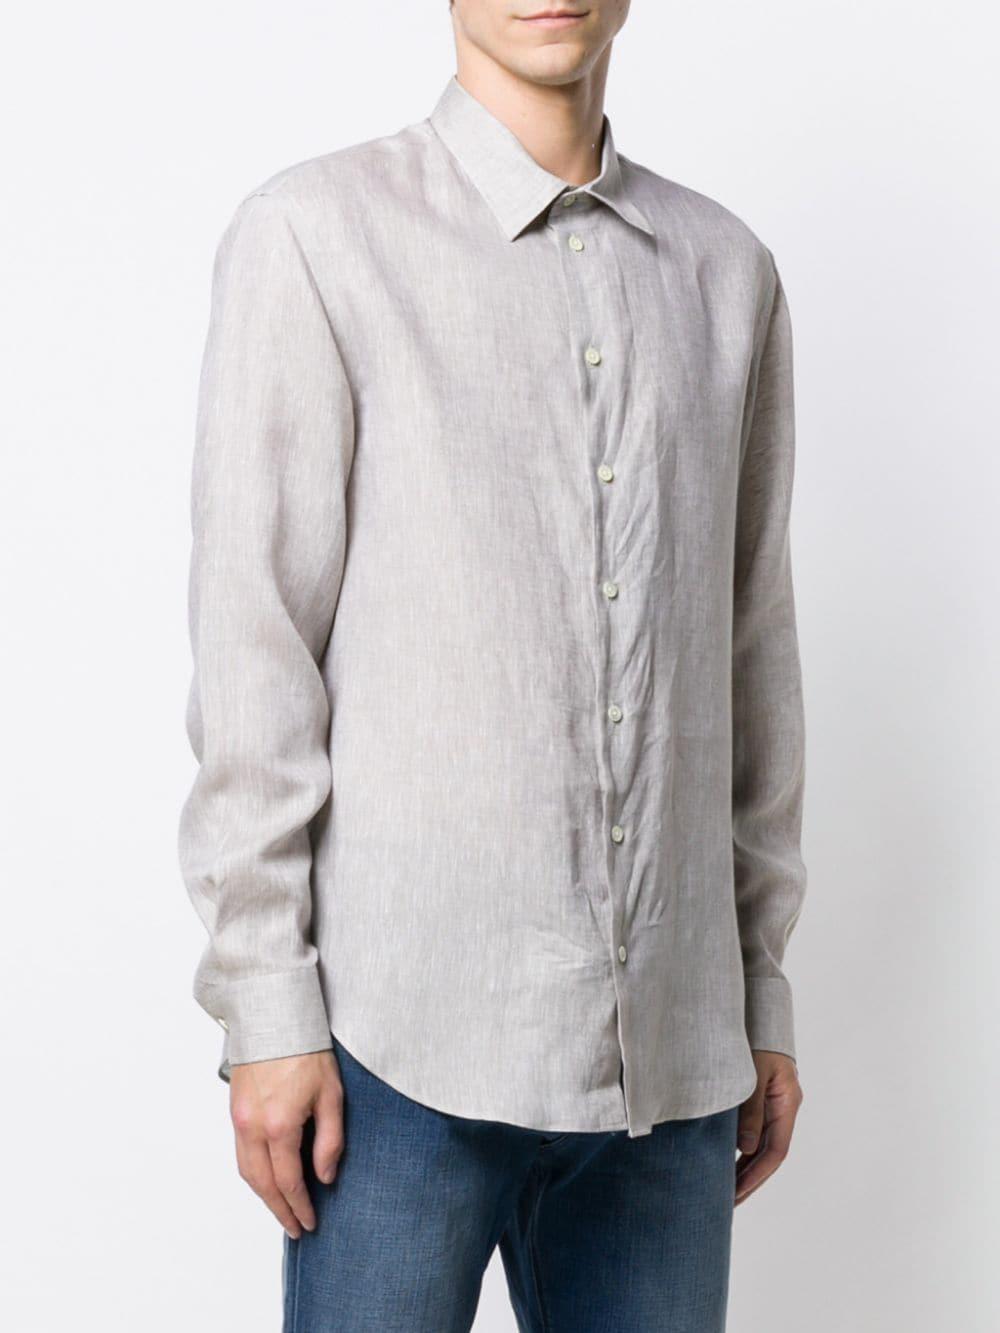 Emporio Armani Linen Classic Button Up Shirt for Men - Lyst